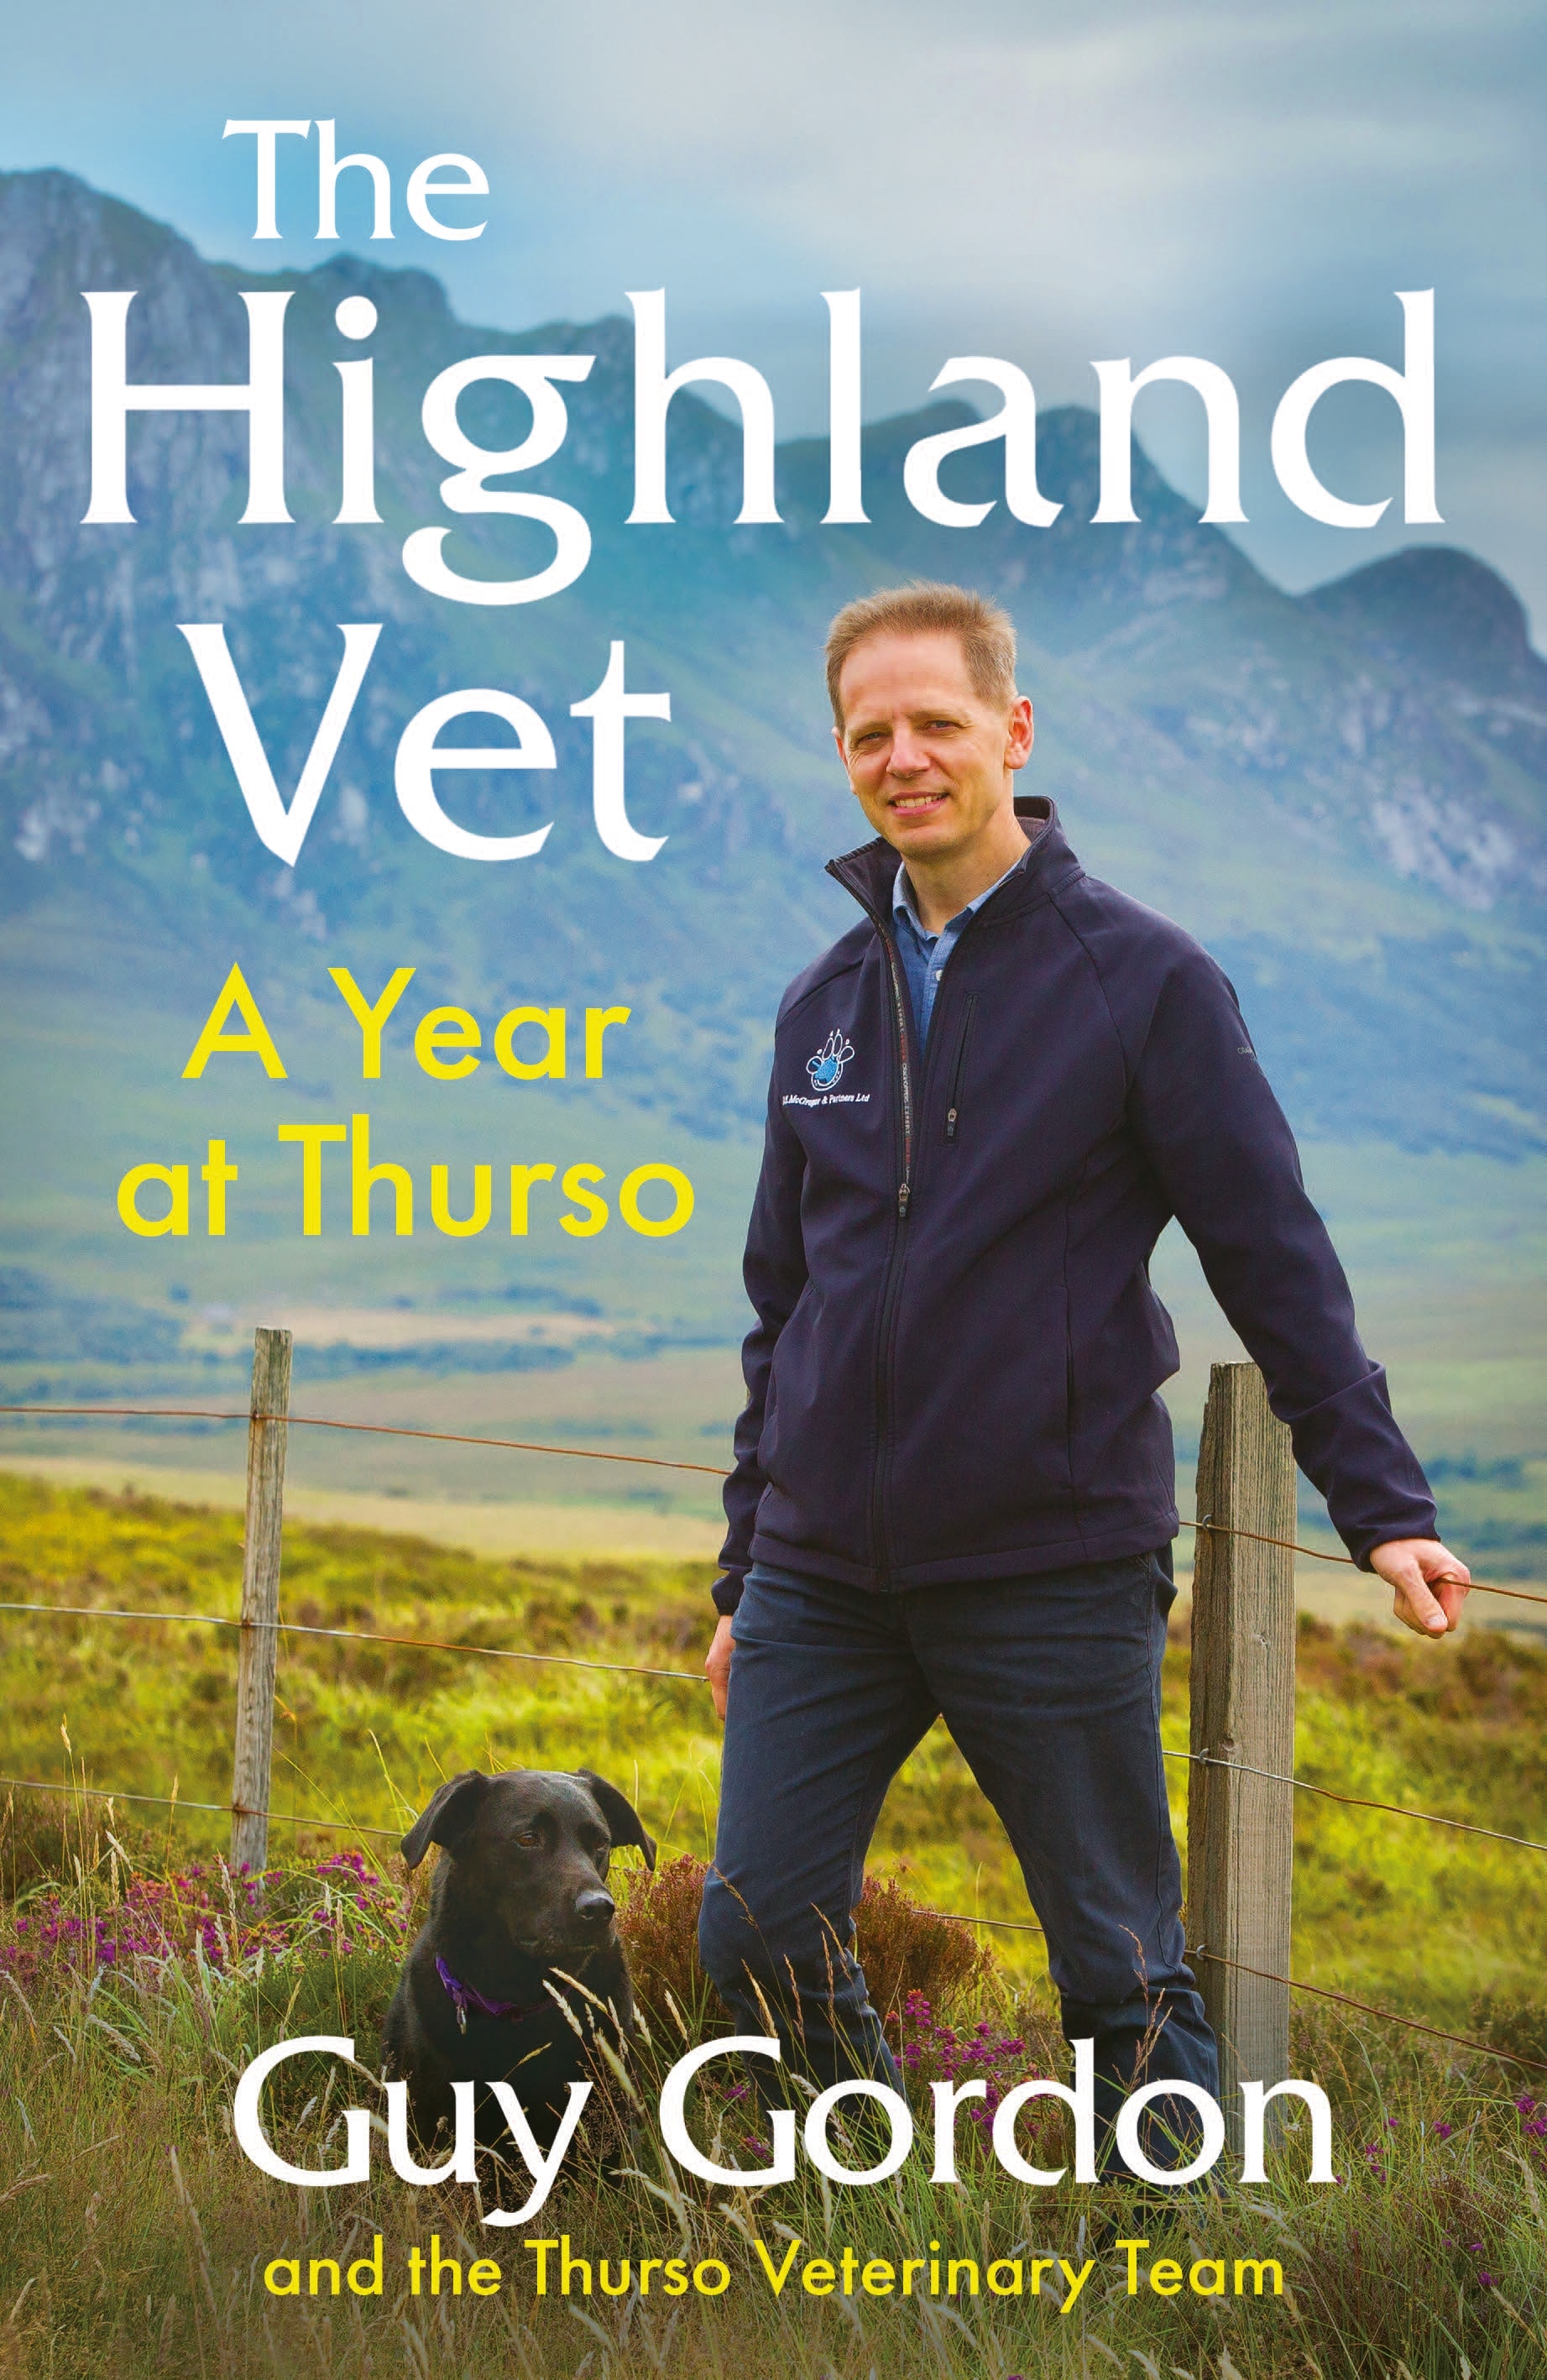 Book “The Highland Vet” by Guy Gordon, The Thurso Veterinary Team — April 14, 2022